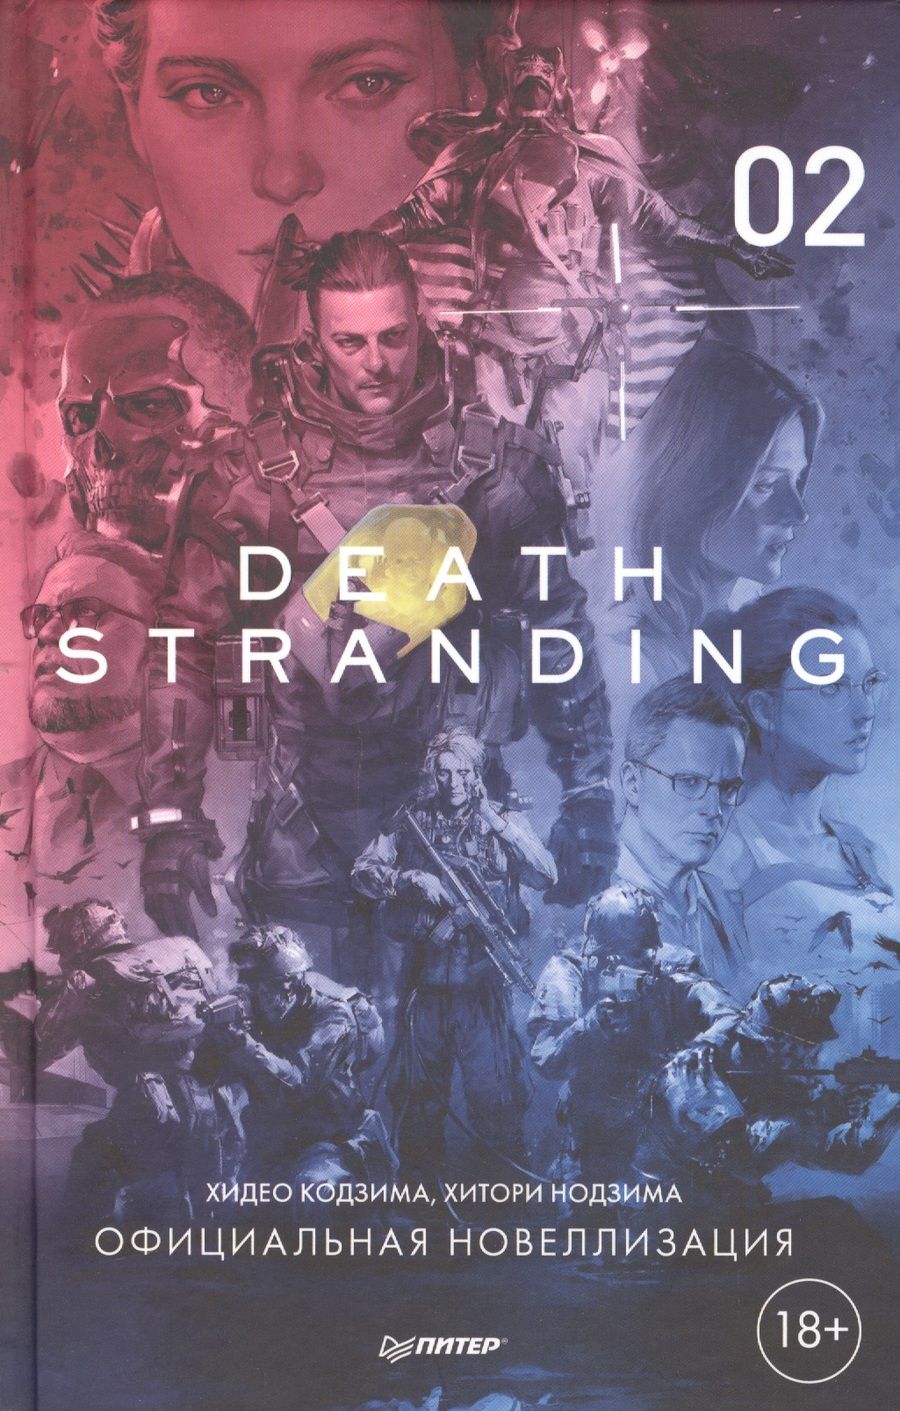 Обложка книги "Кодзима, Кодзима: Death Stranding. Часть 2"